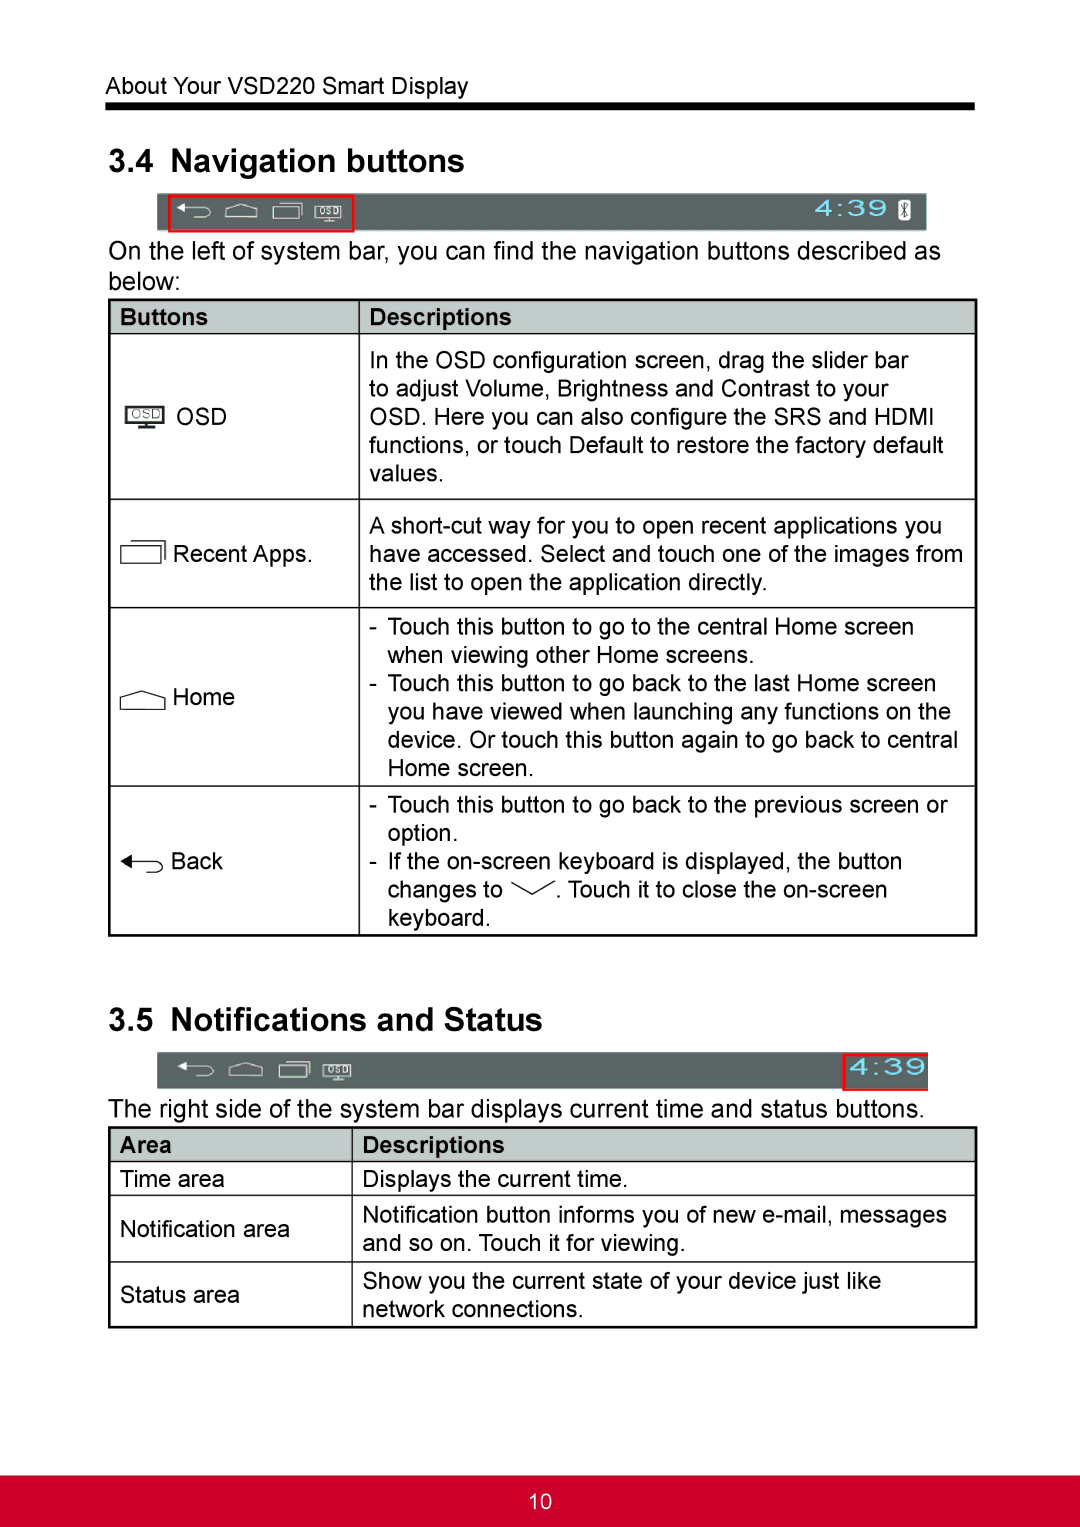 ViewSonic VSD220 manual Navigation buttons, Notifications and Status, Buttons Descriptions, Area Descriptions 